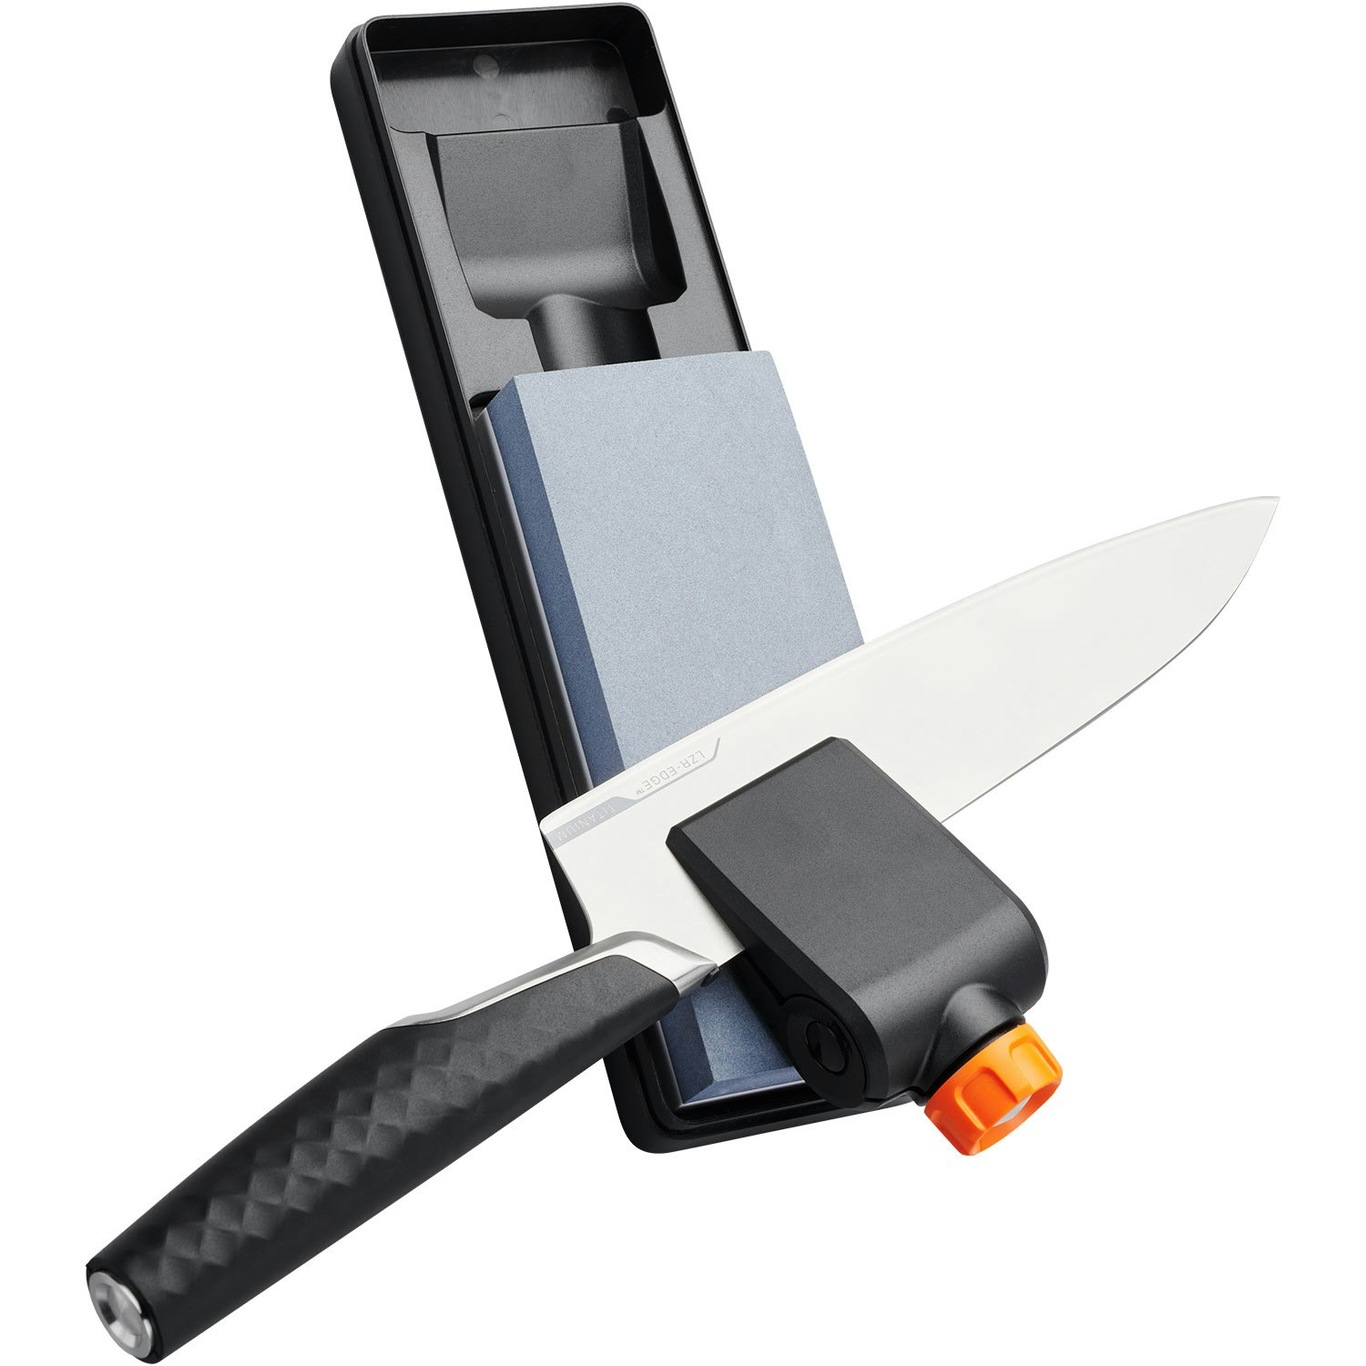 https://royaldesign.com/image/2/fiskars-premium-knife-sharpener-0?w=800&quality=80